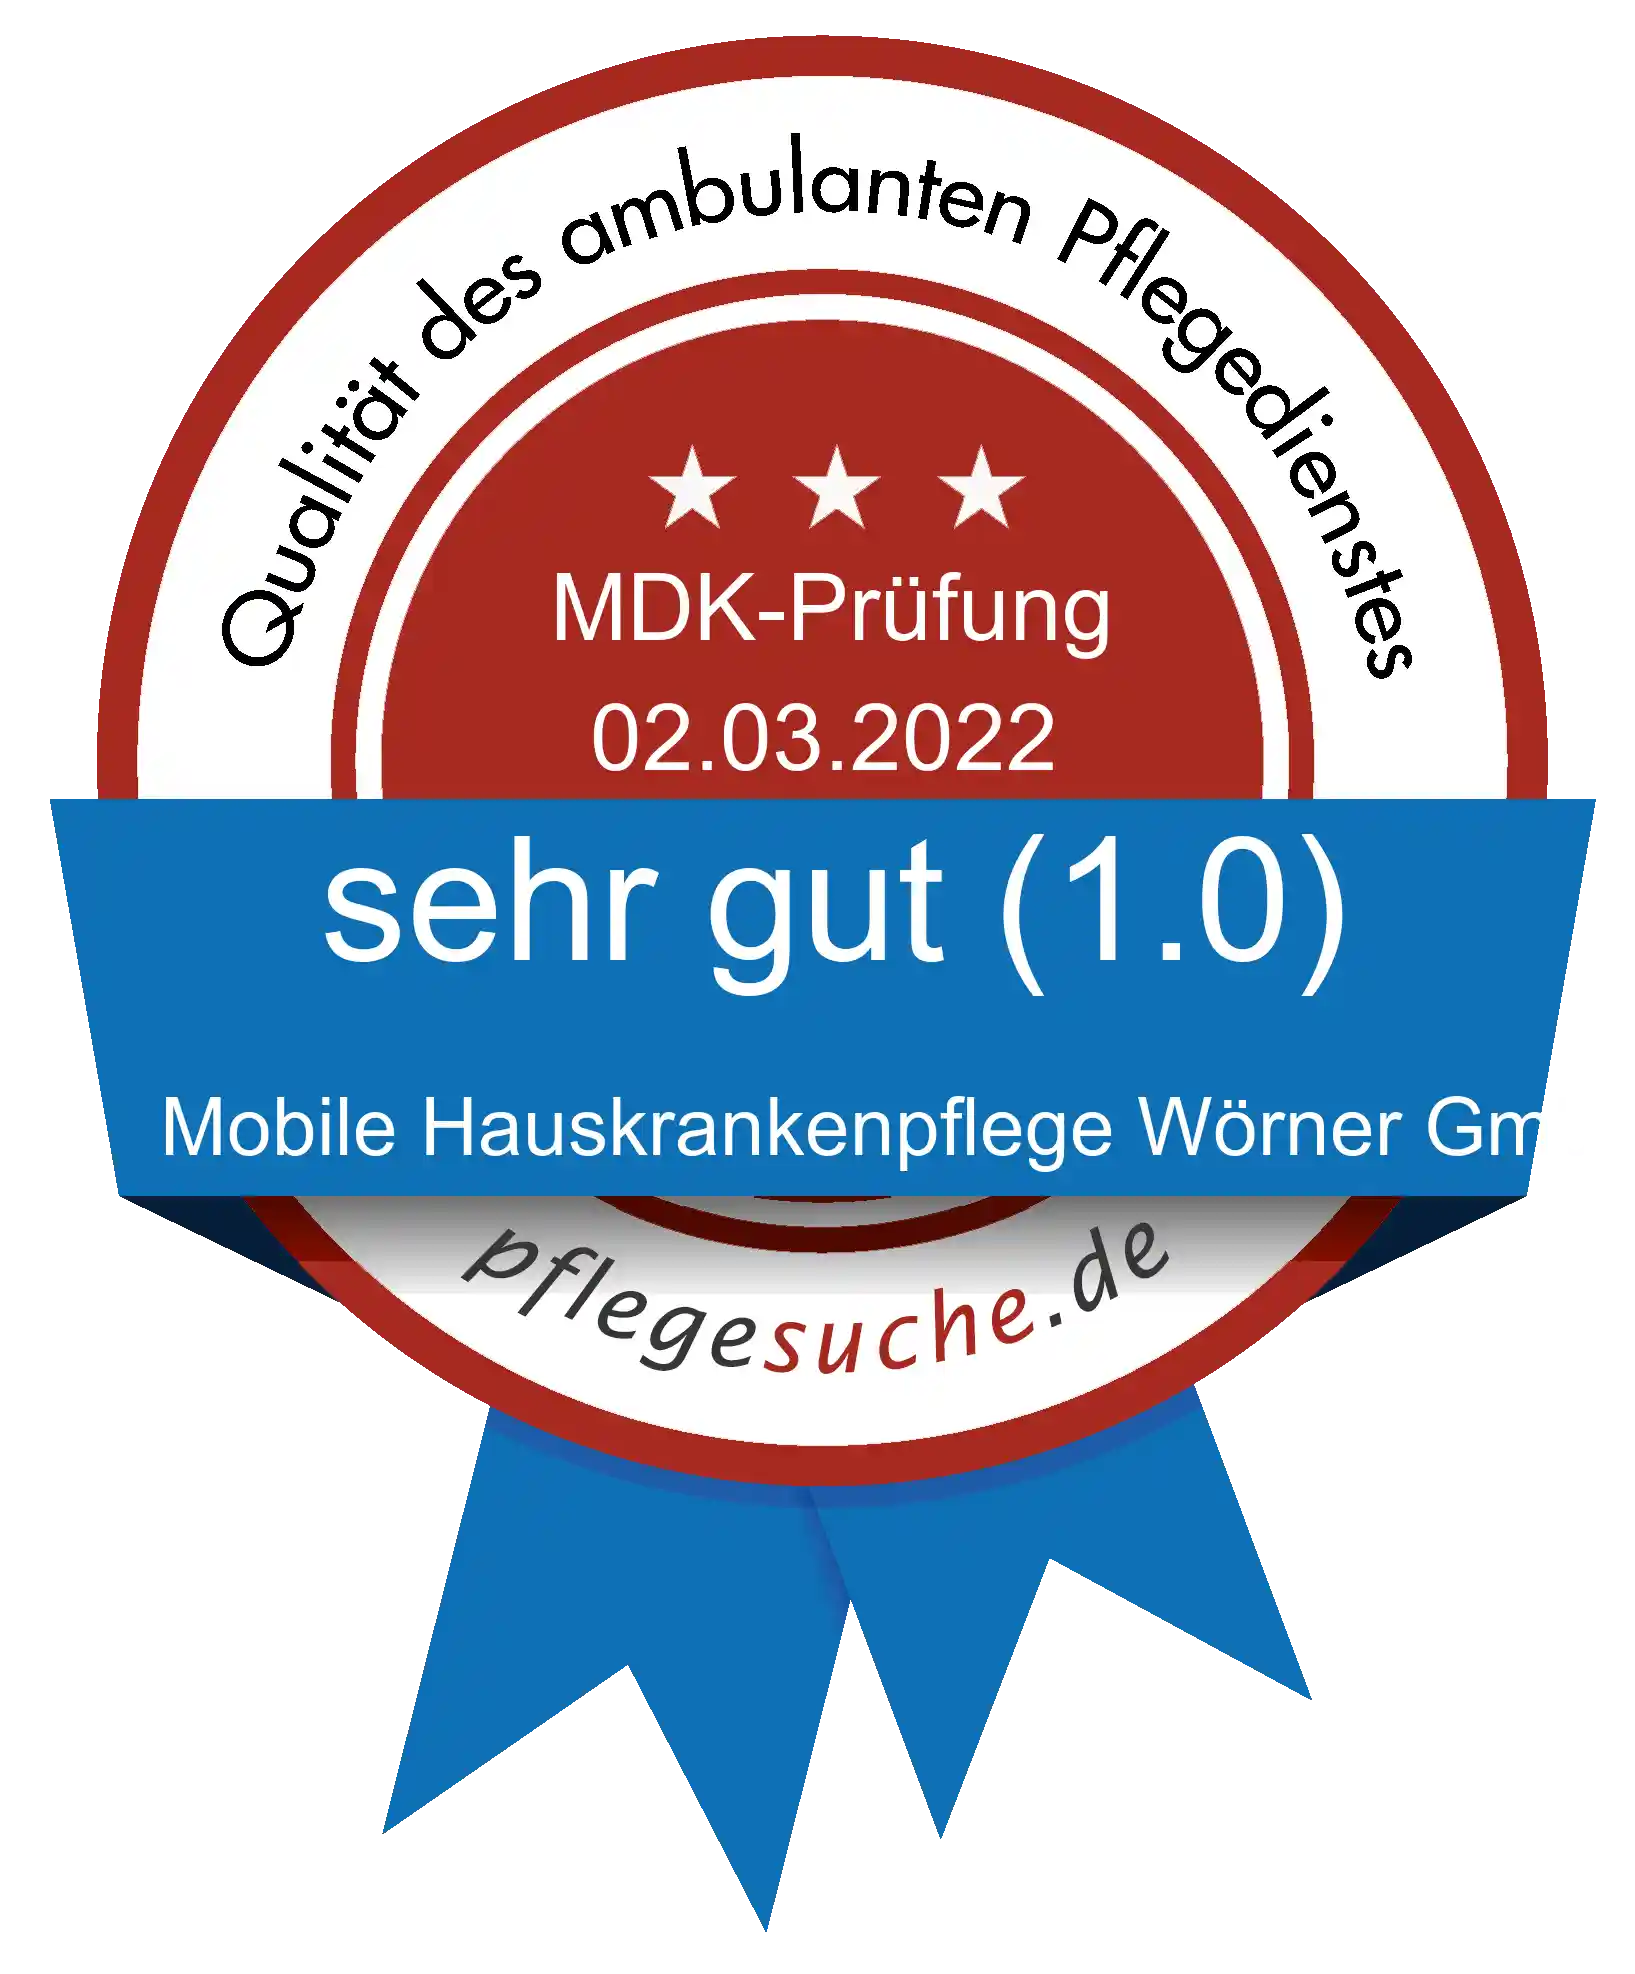 Siegel Benotung: Mobile Hauskrankenpflege Wörner GmbH